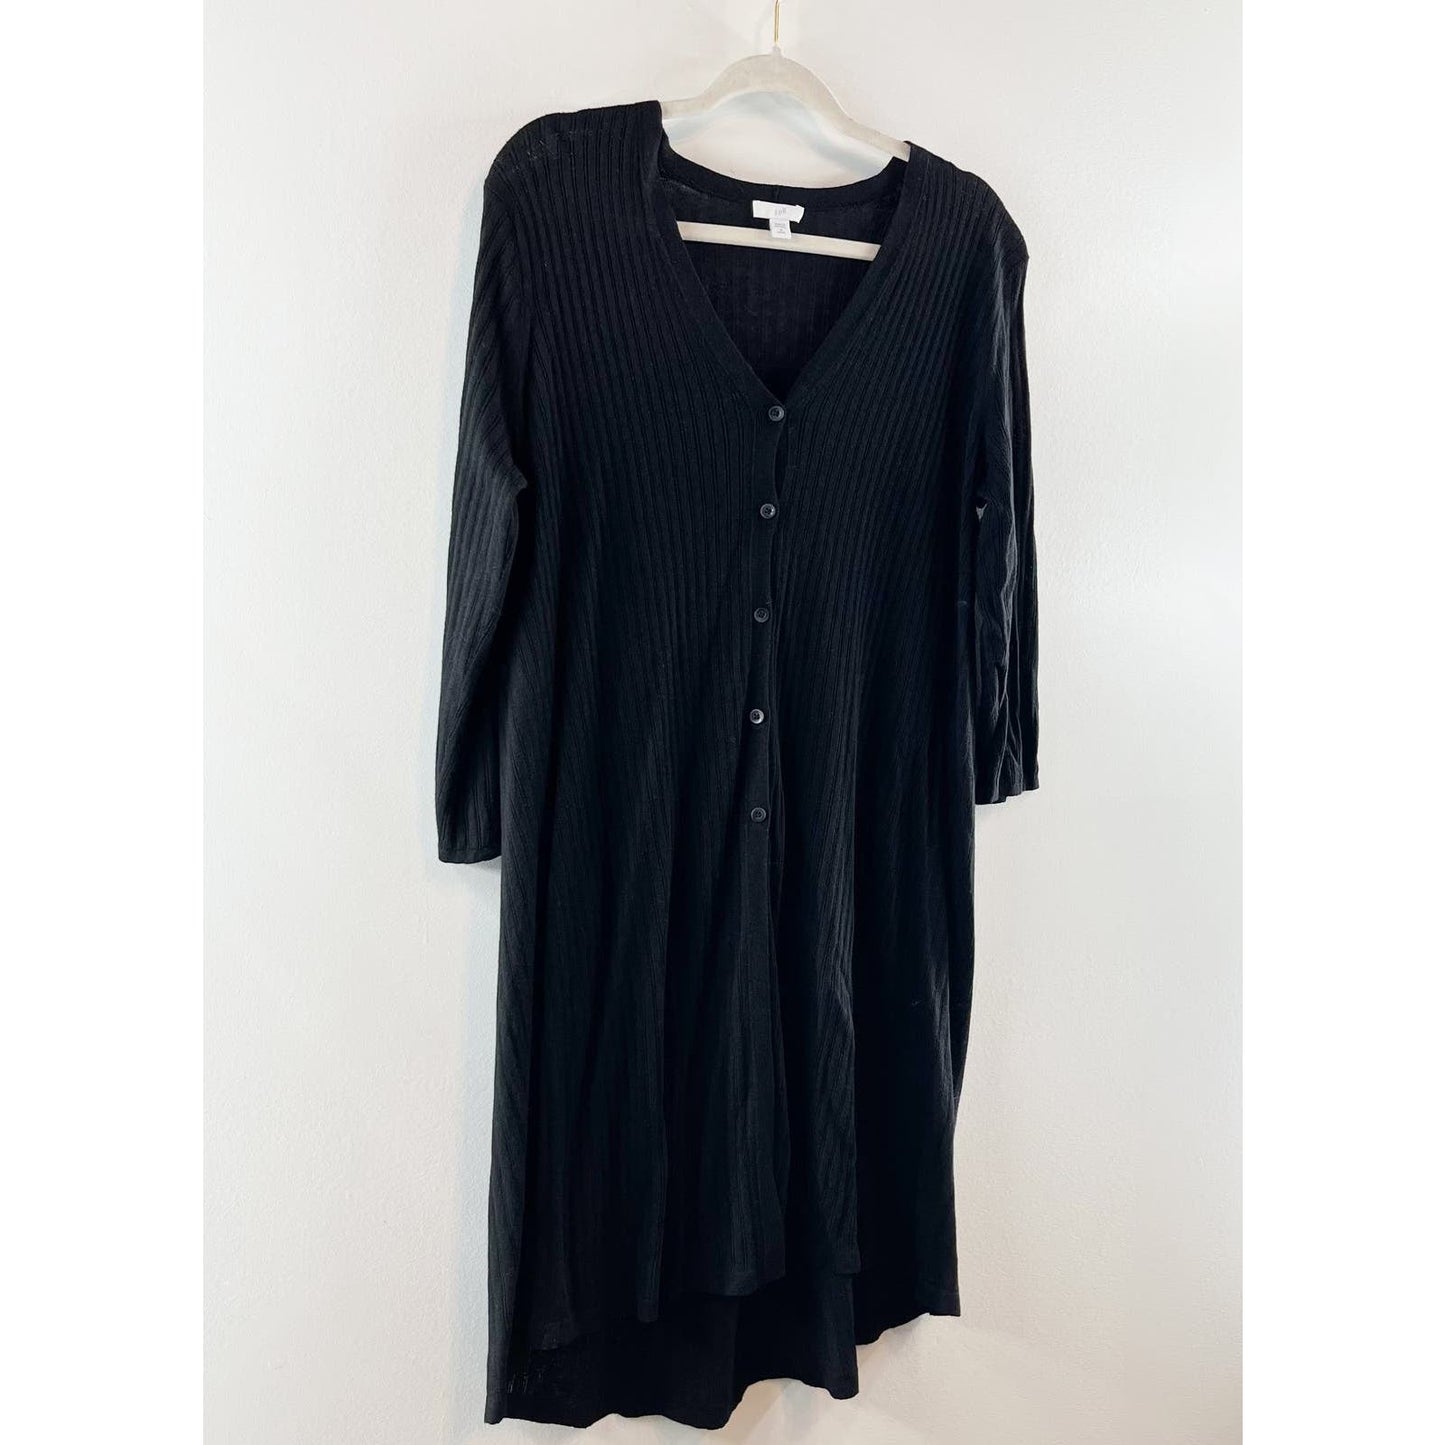 J. Jill Linen Blend Ribbed Sweater Cardigan Dress Black Medium Petite